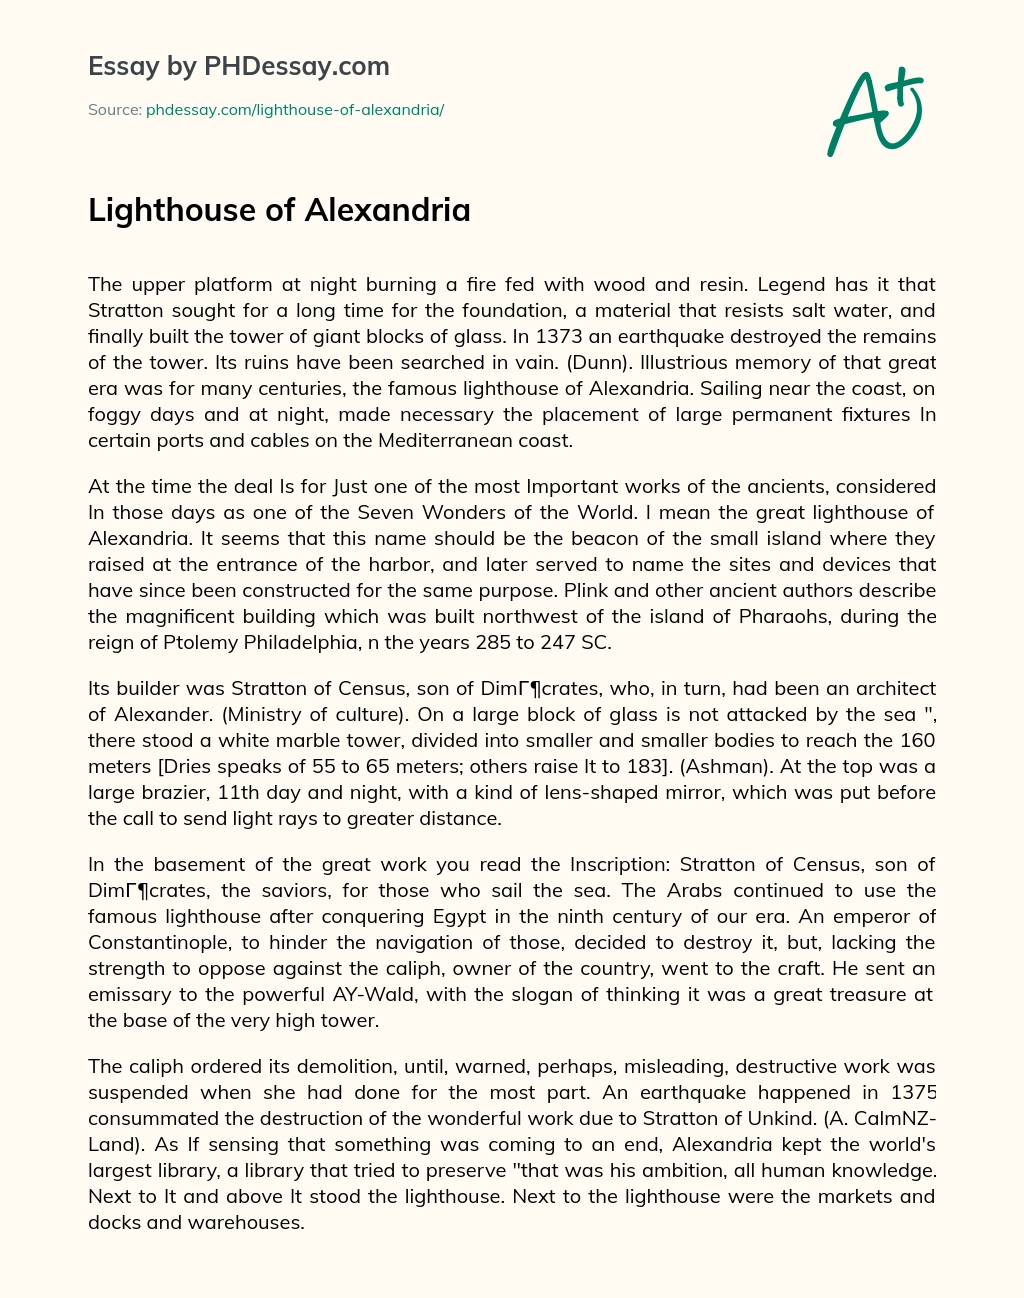 Lighthouse of Alexandria essay